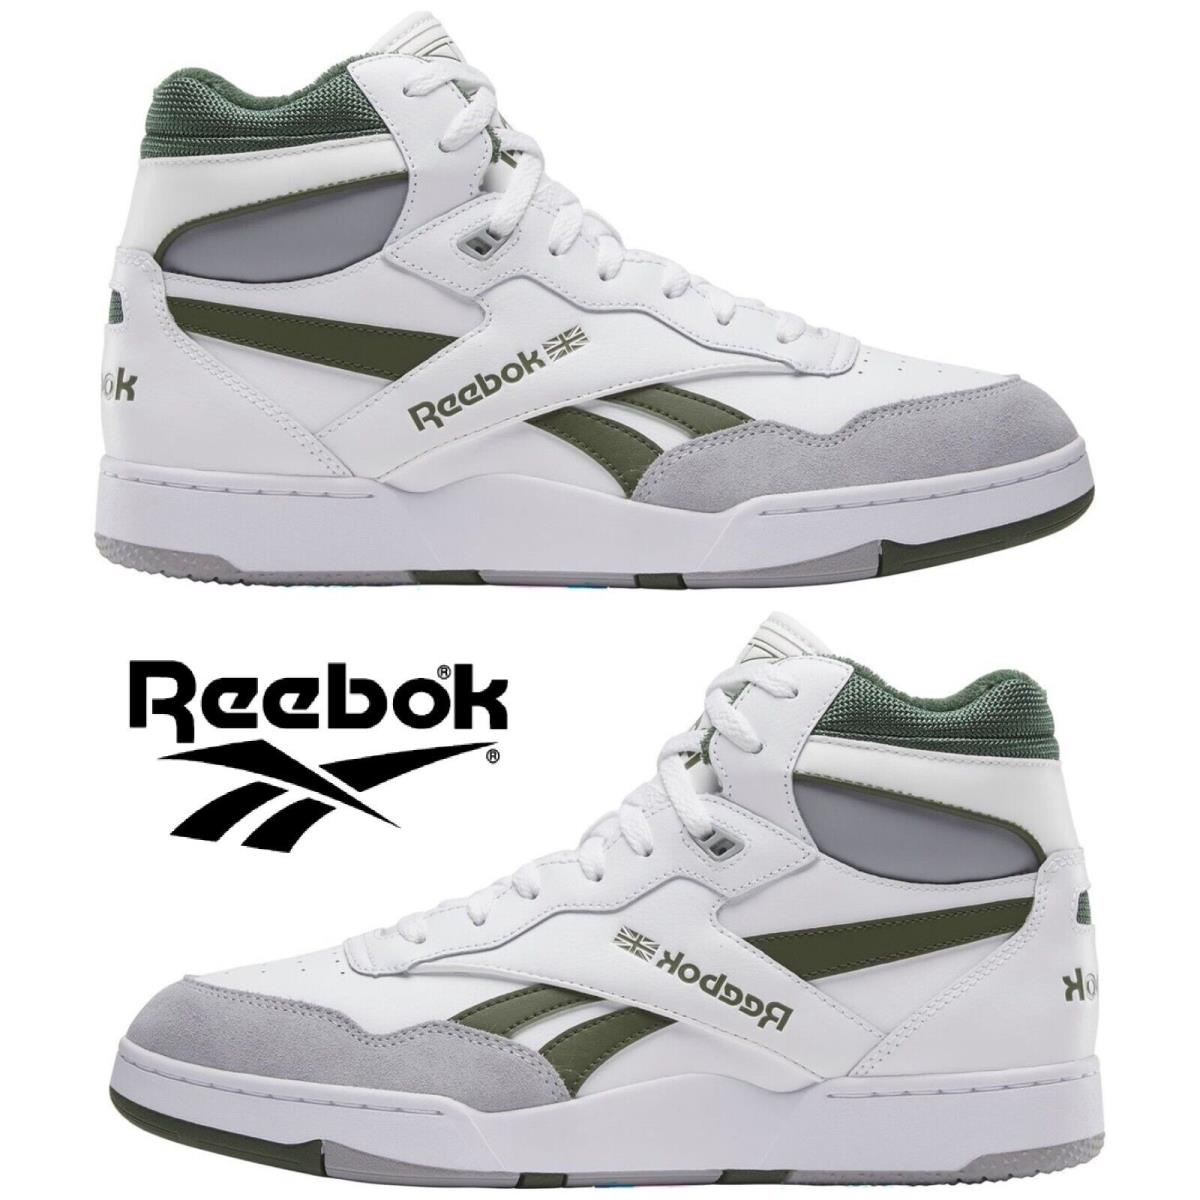 Reebok BB 4000 II Mid Shoes Men`s Sneakers Basketball Running Casual Sport